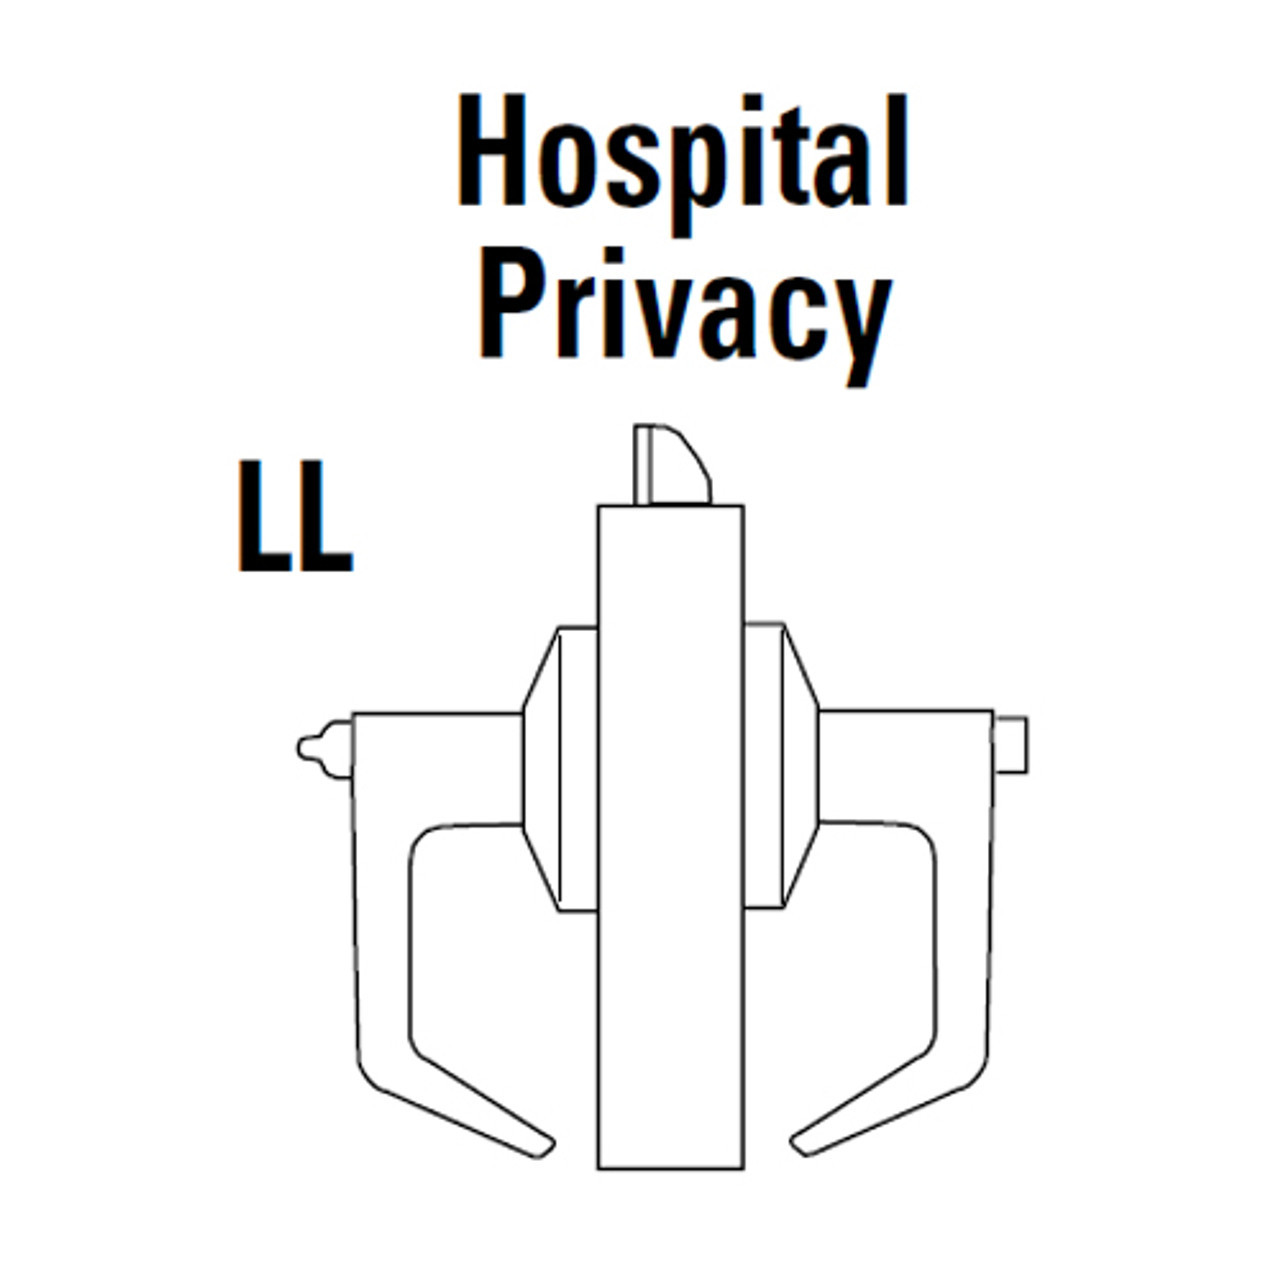 9K30LL14CSTK606LM Best 9K Series Hospital Privacy Heavy Duty Cylindrical Lever Locks in Satin Brass